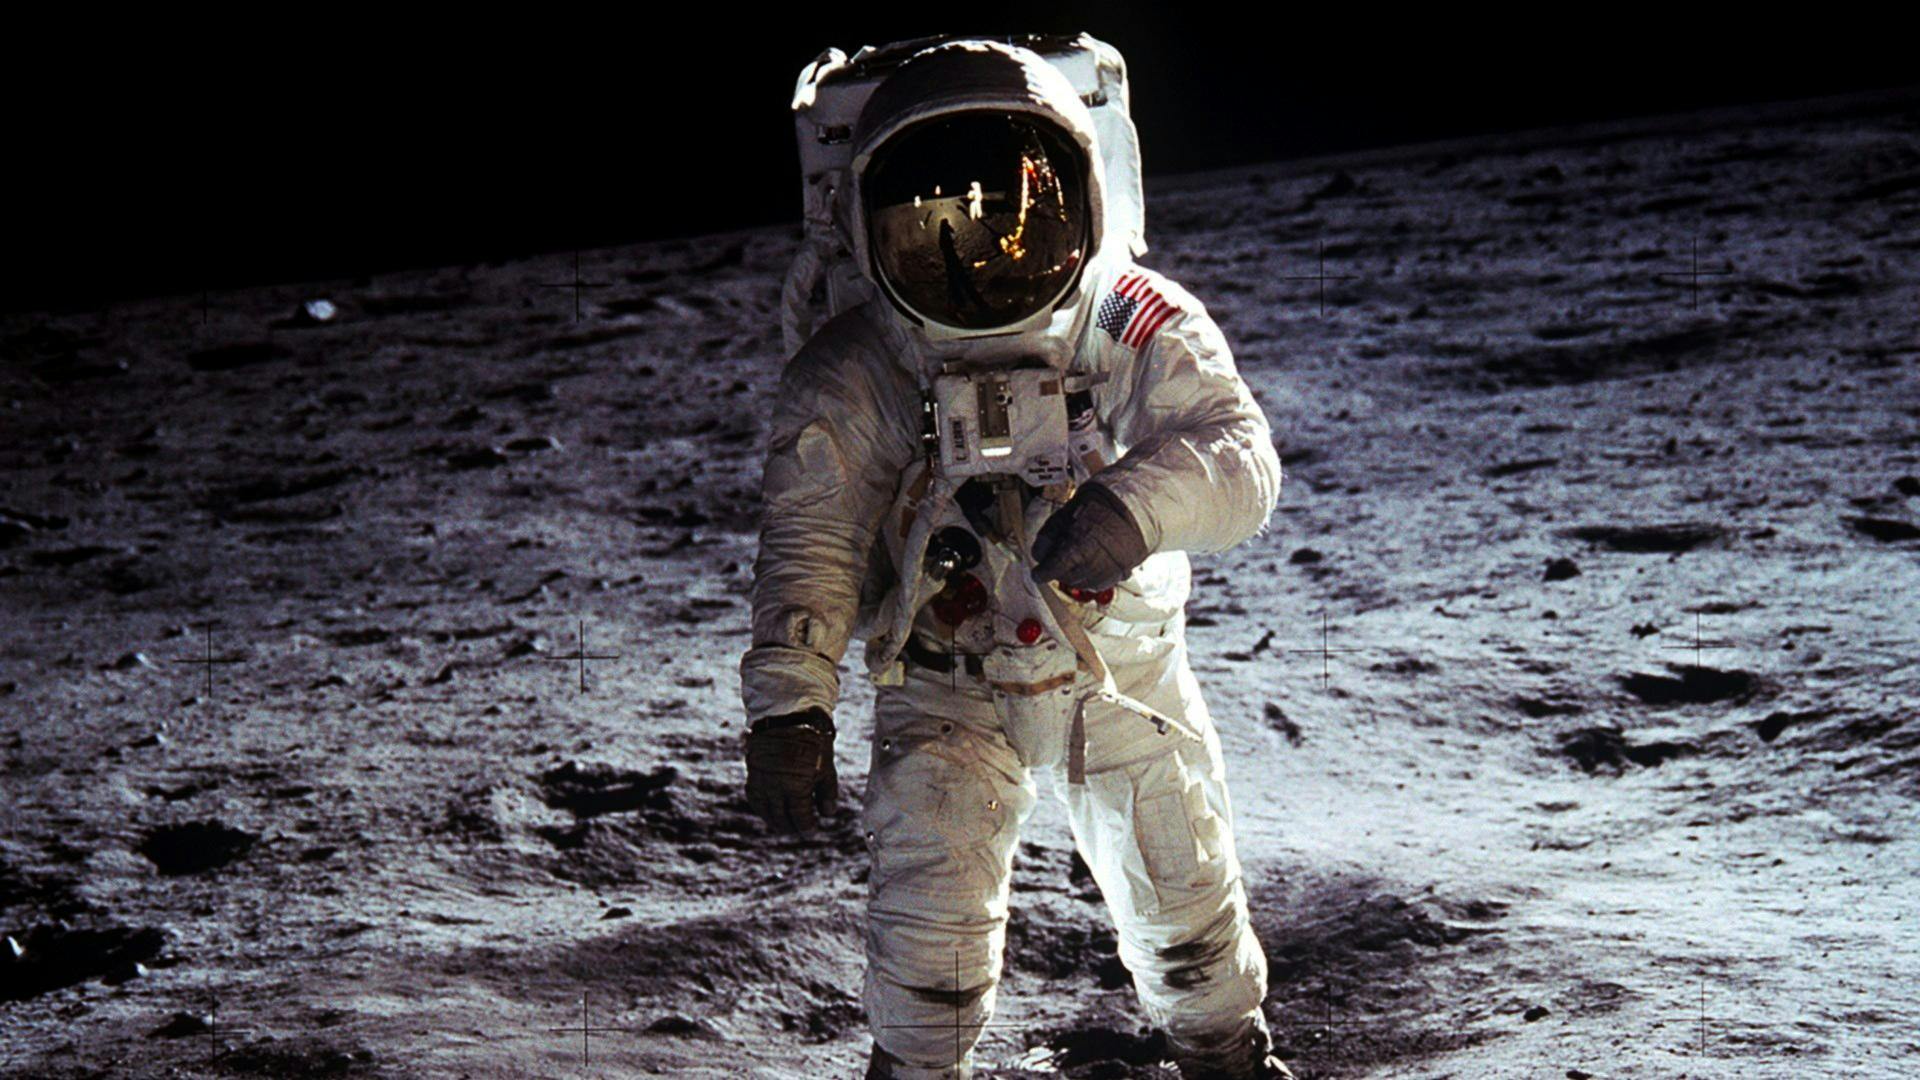 The "Fallen Astronaut" Left Behind on the Moon